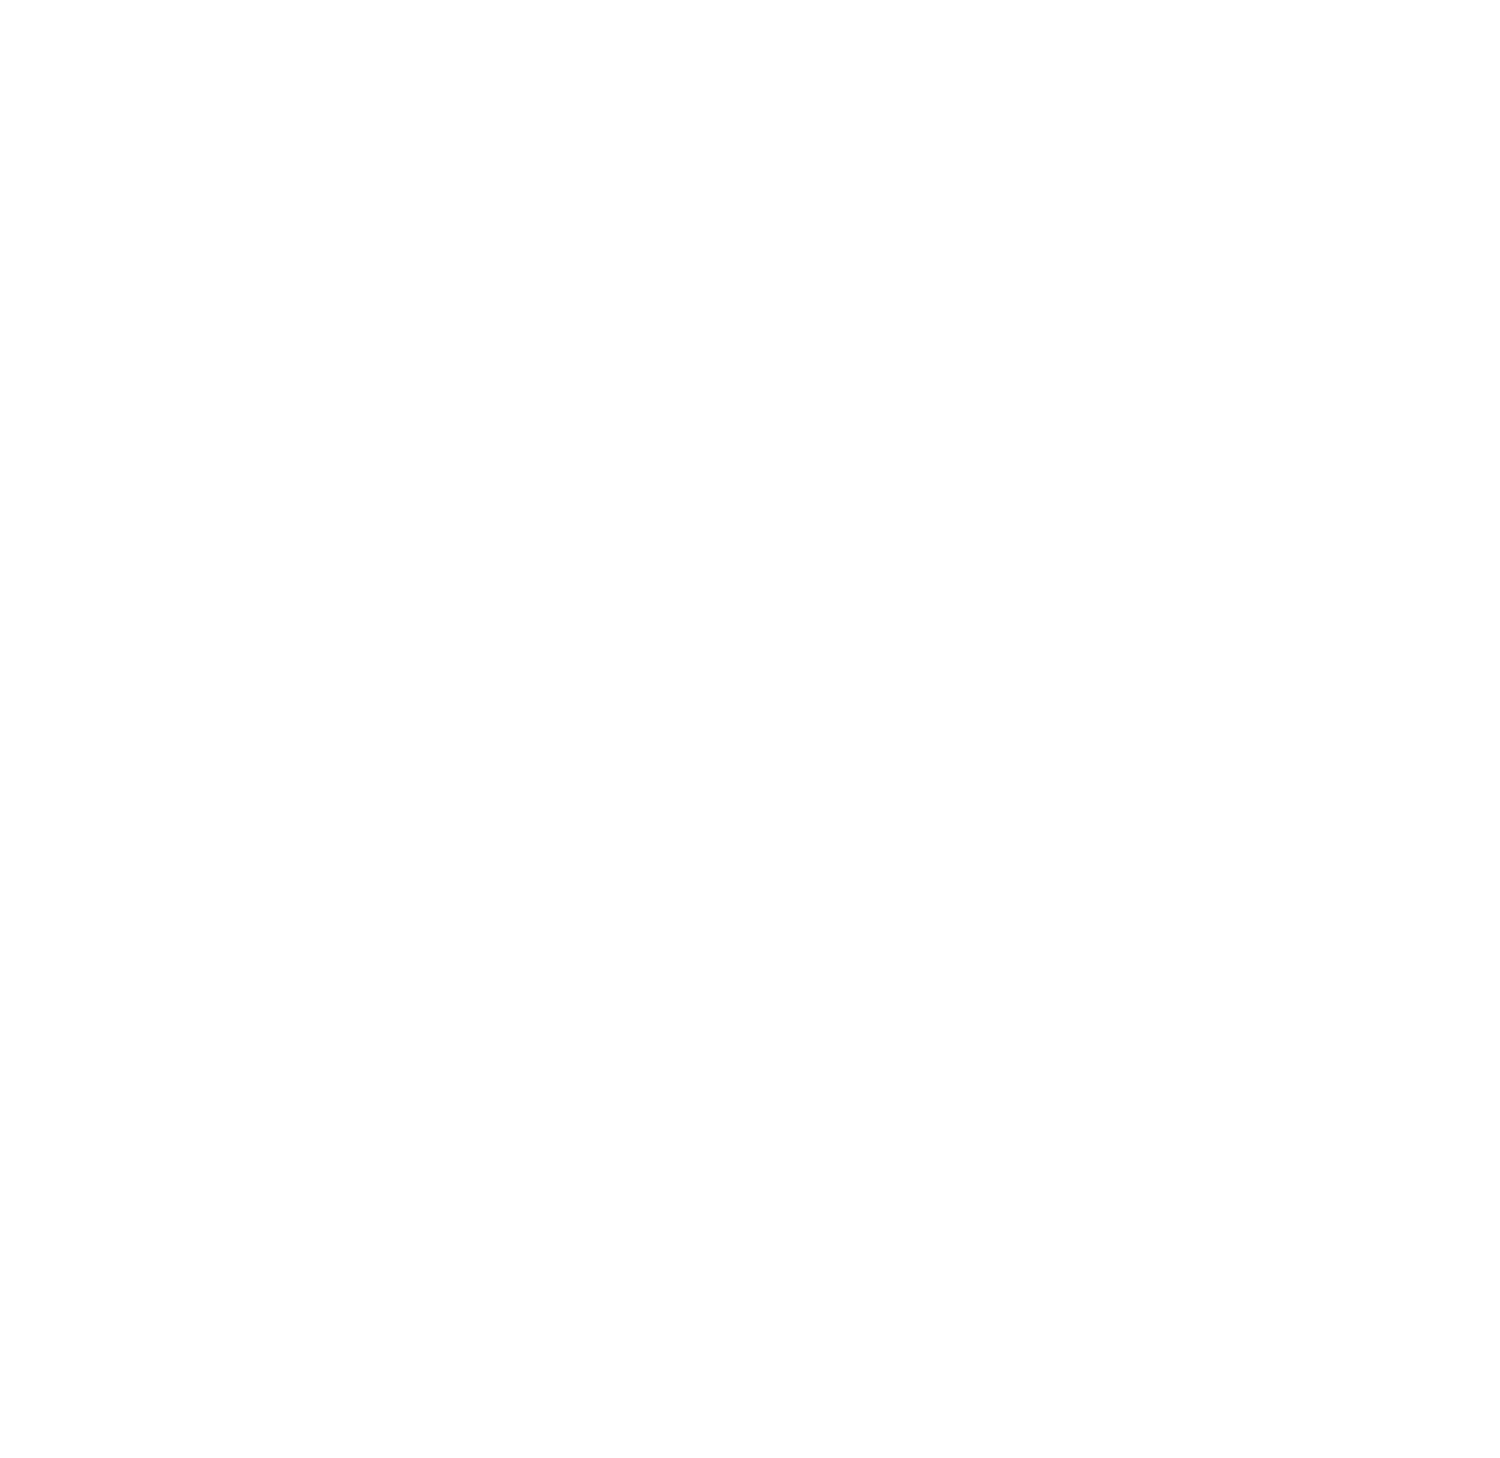 DWNTWN Muncie, Indiana  |  Muncie Downtown Development Partnership